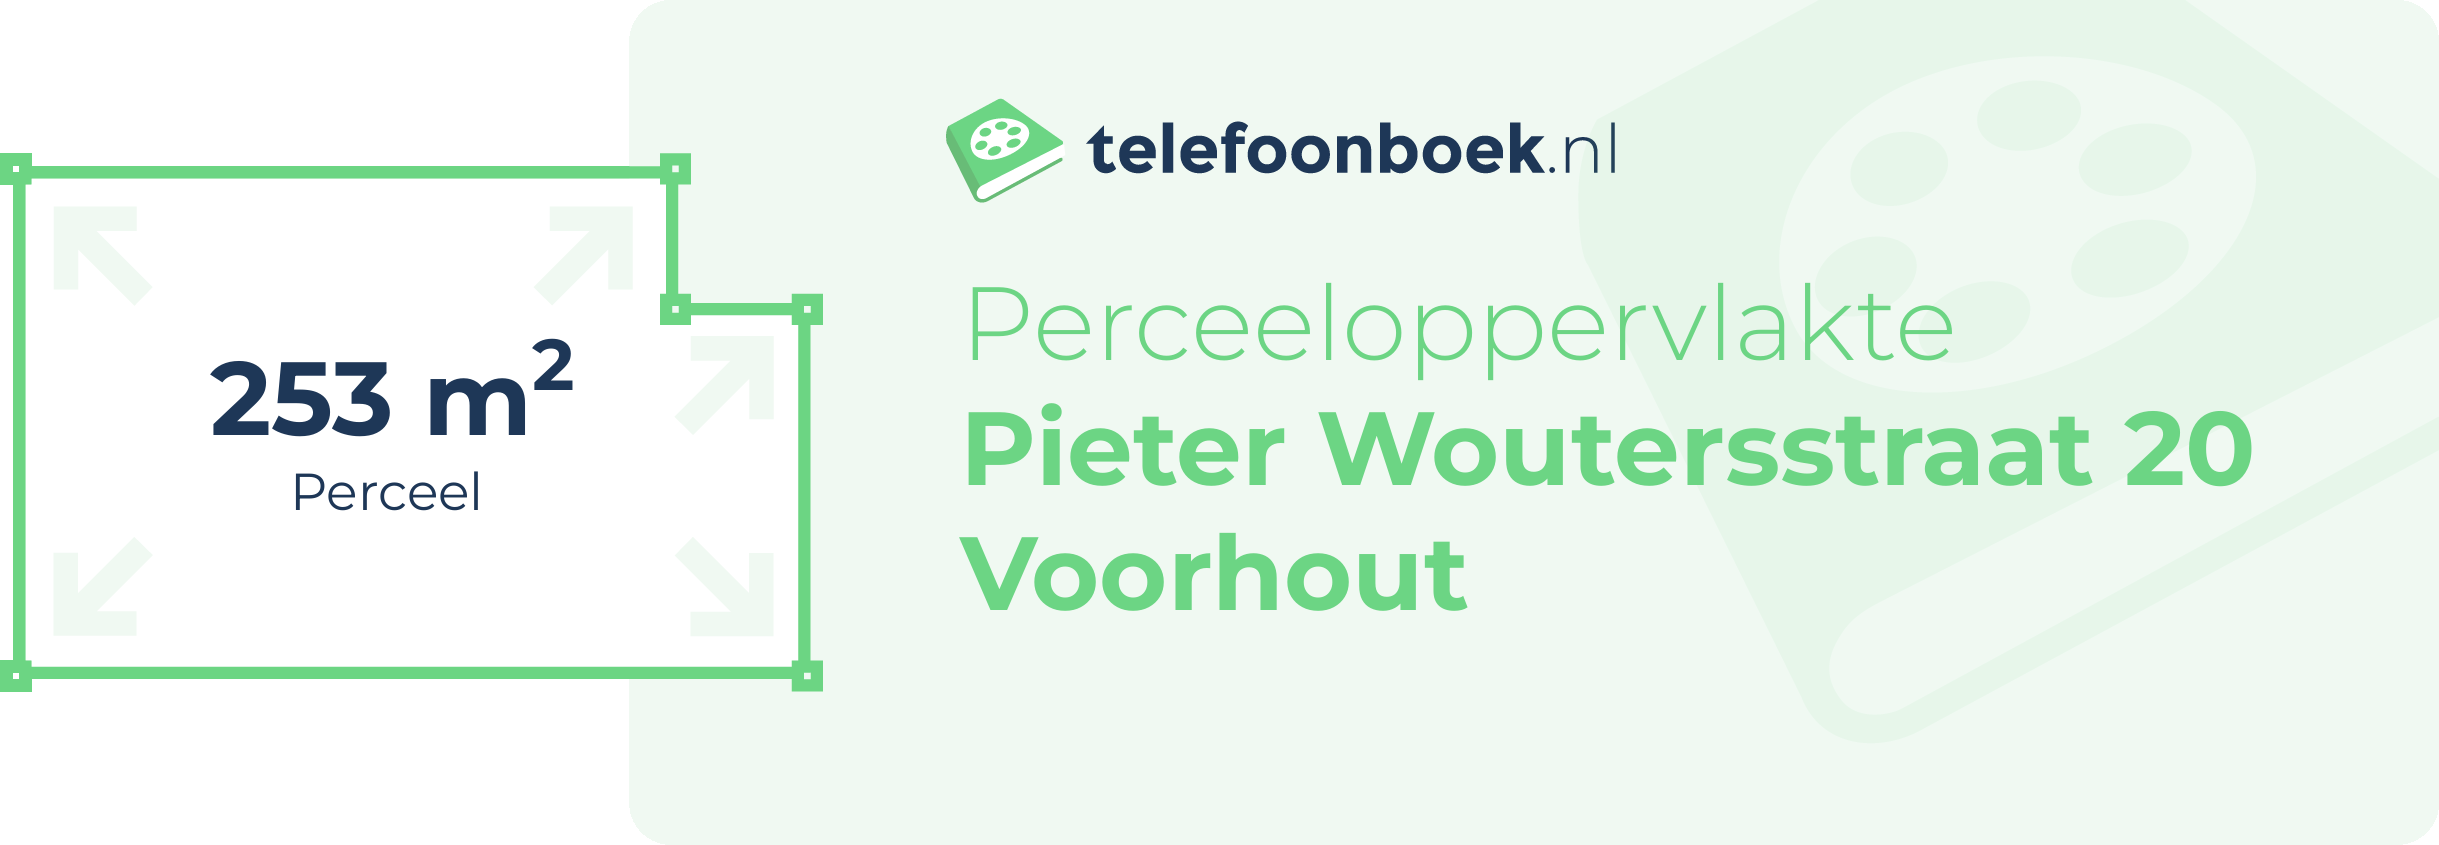 Perceeloppervlakte Pieter Woutersstraat 20 Voorhout